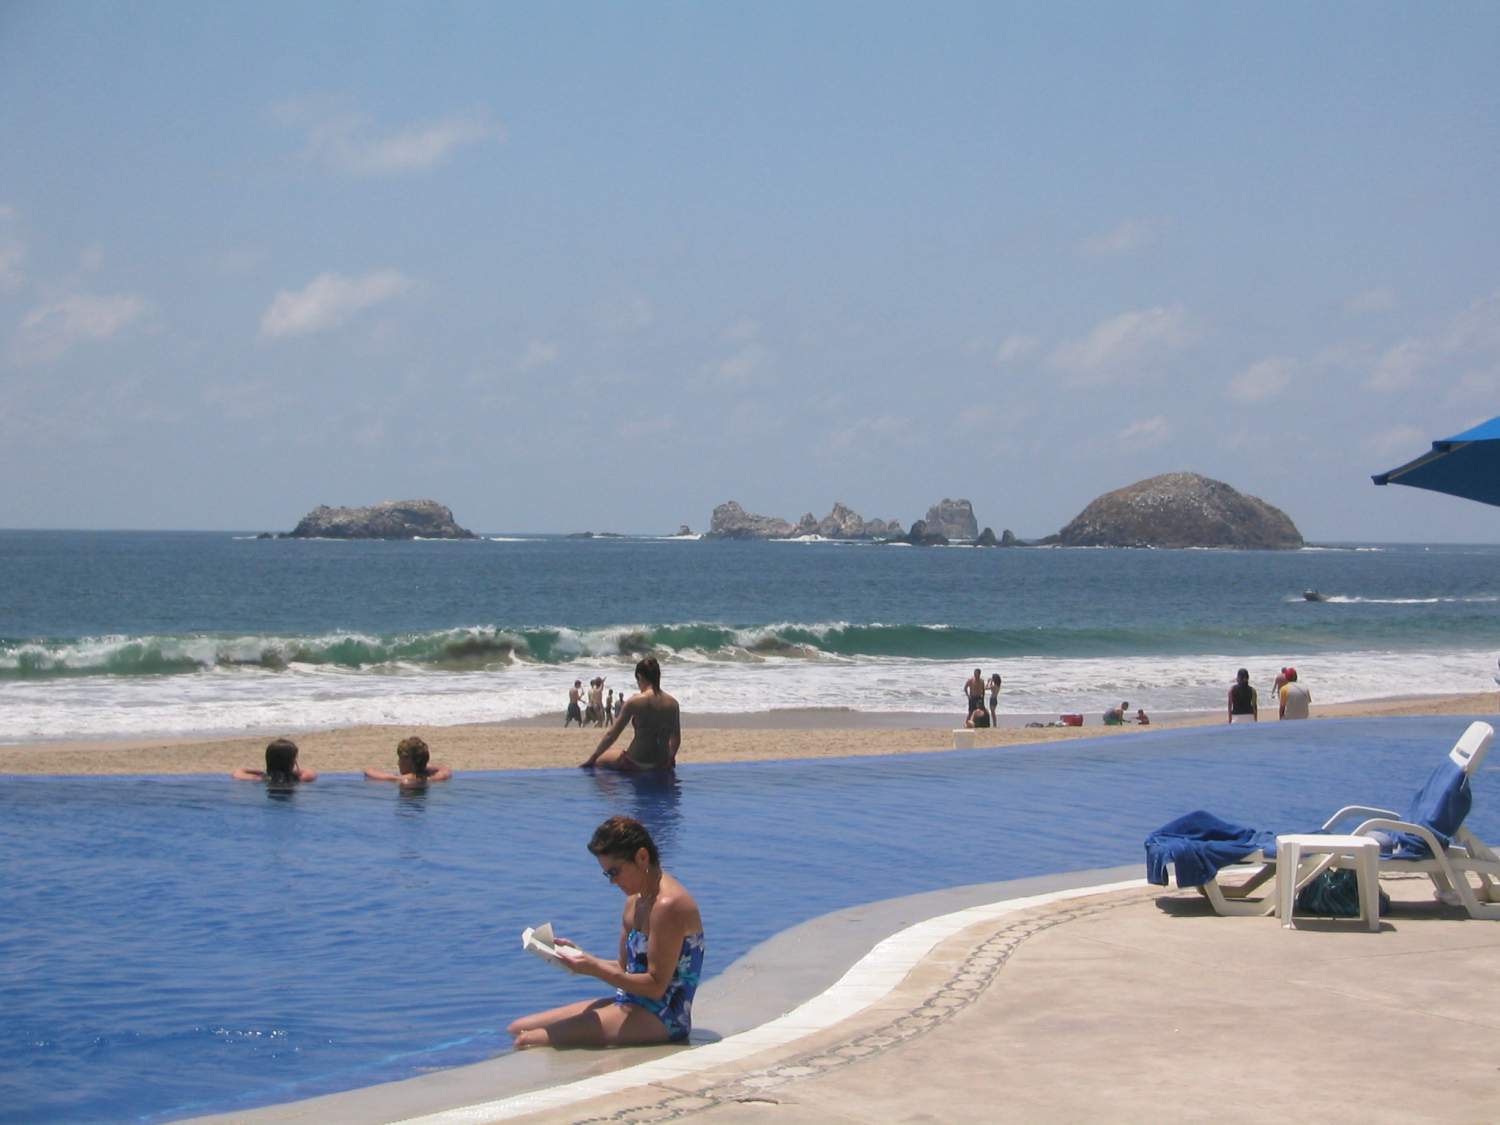 Beach and pool in Ixtapa, Mexico